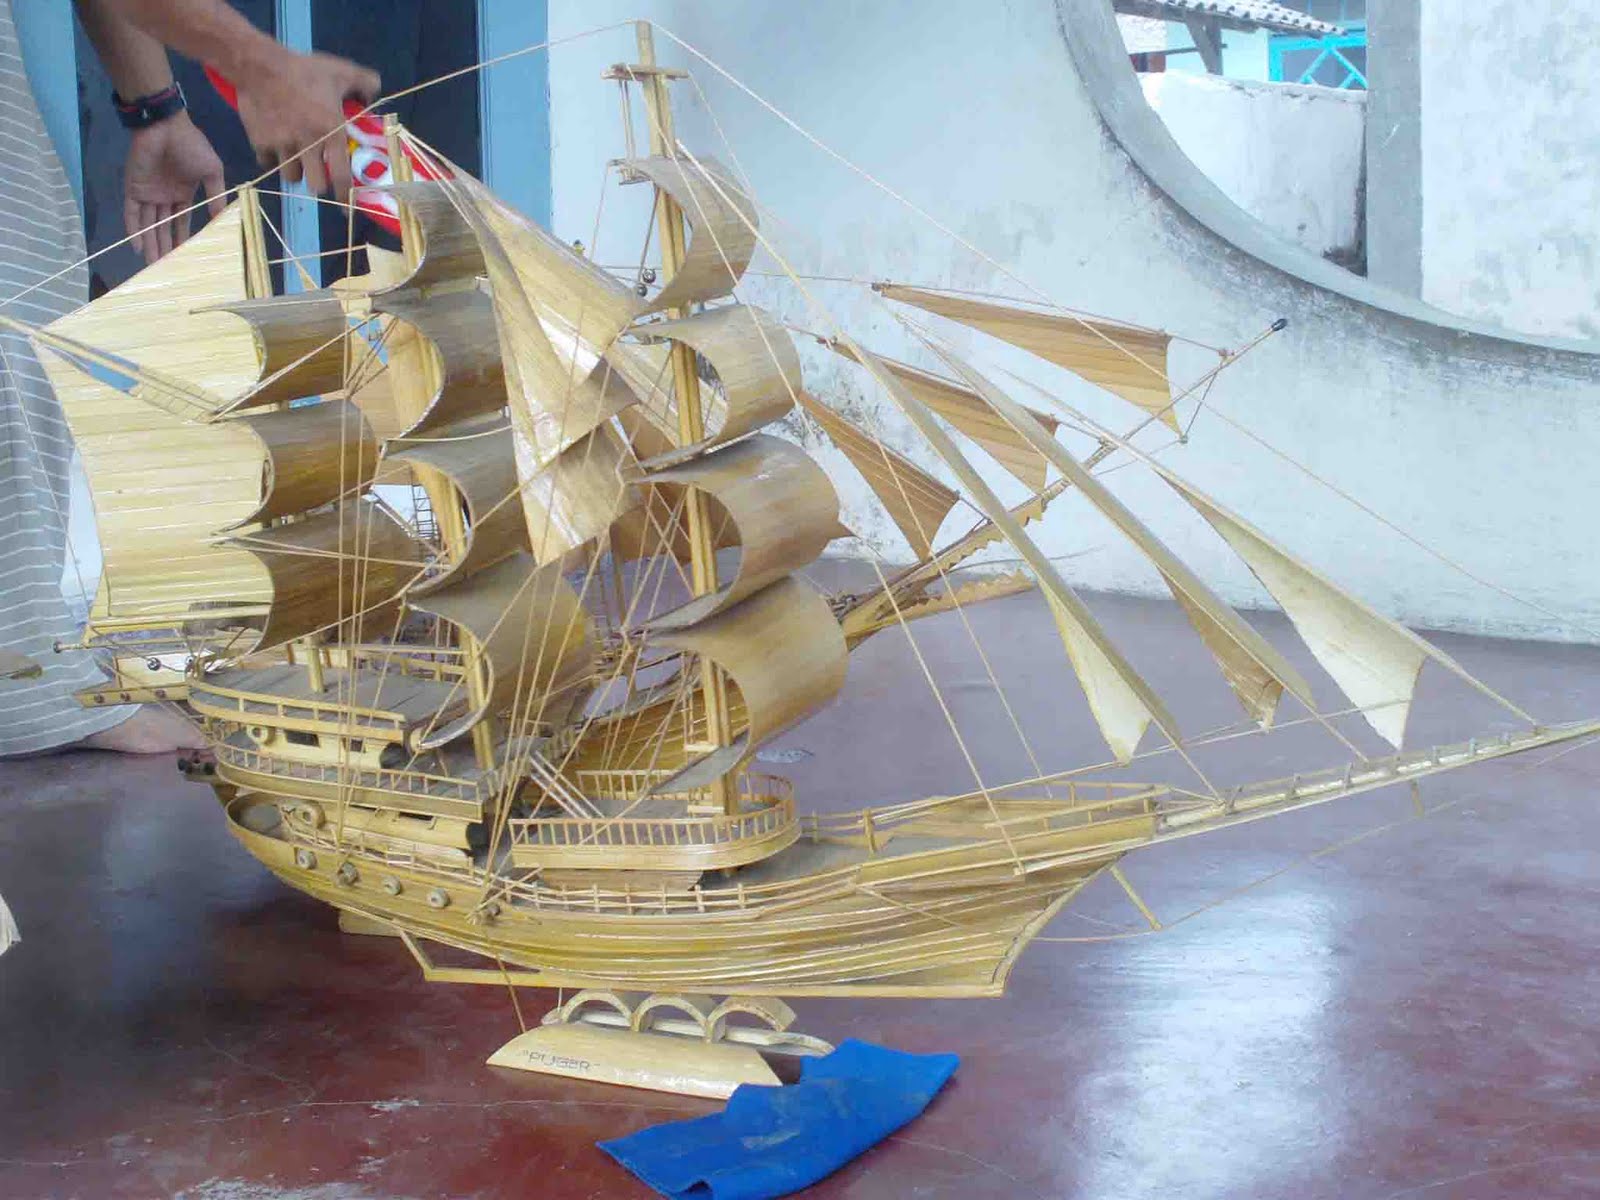  miniatur  kapal  layar  dari  bamboo by okalpuger seni itu 